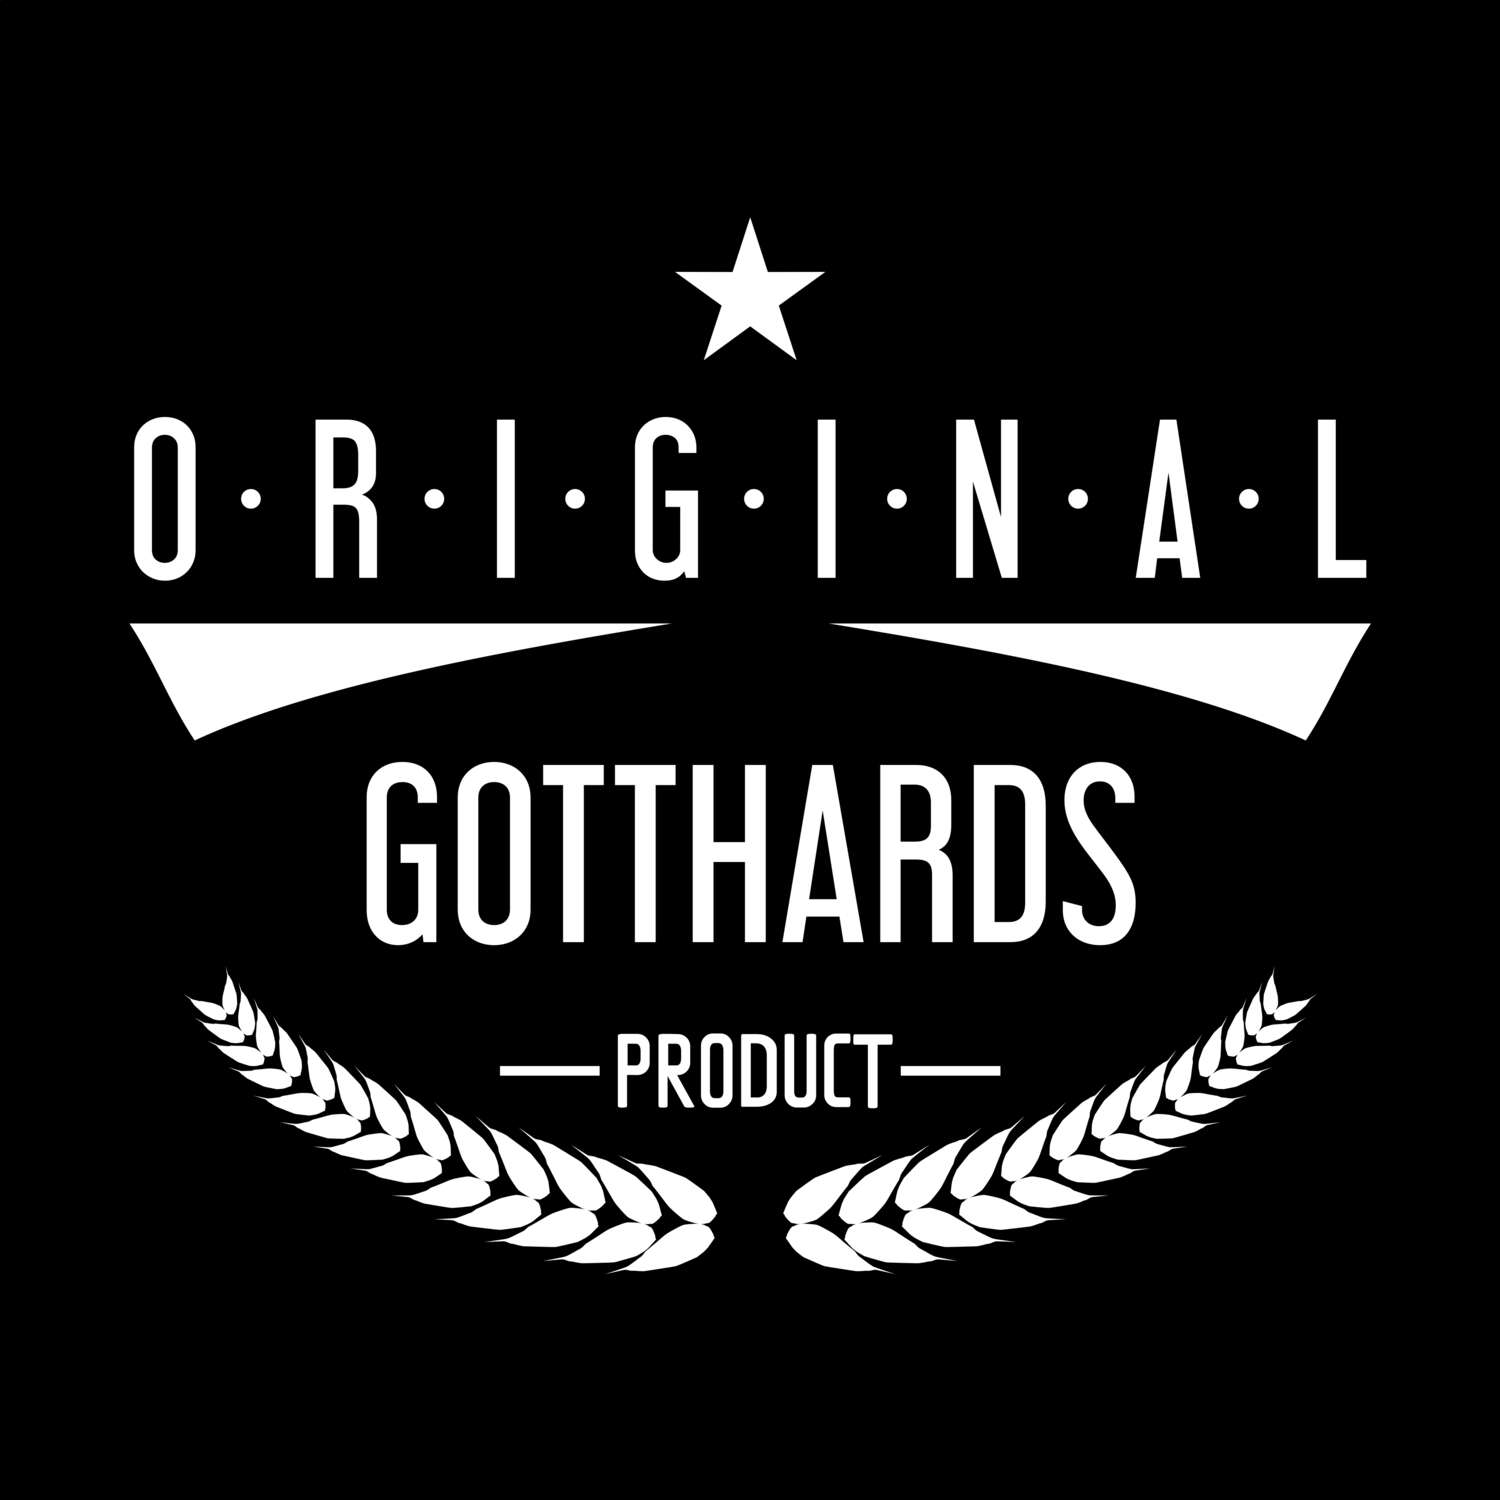 Gotthards T-Shirt »Original Product«